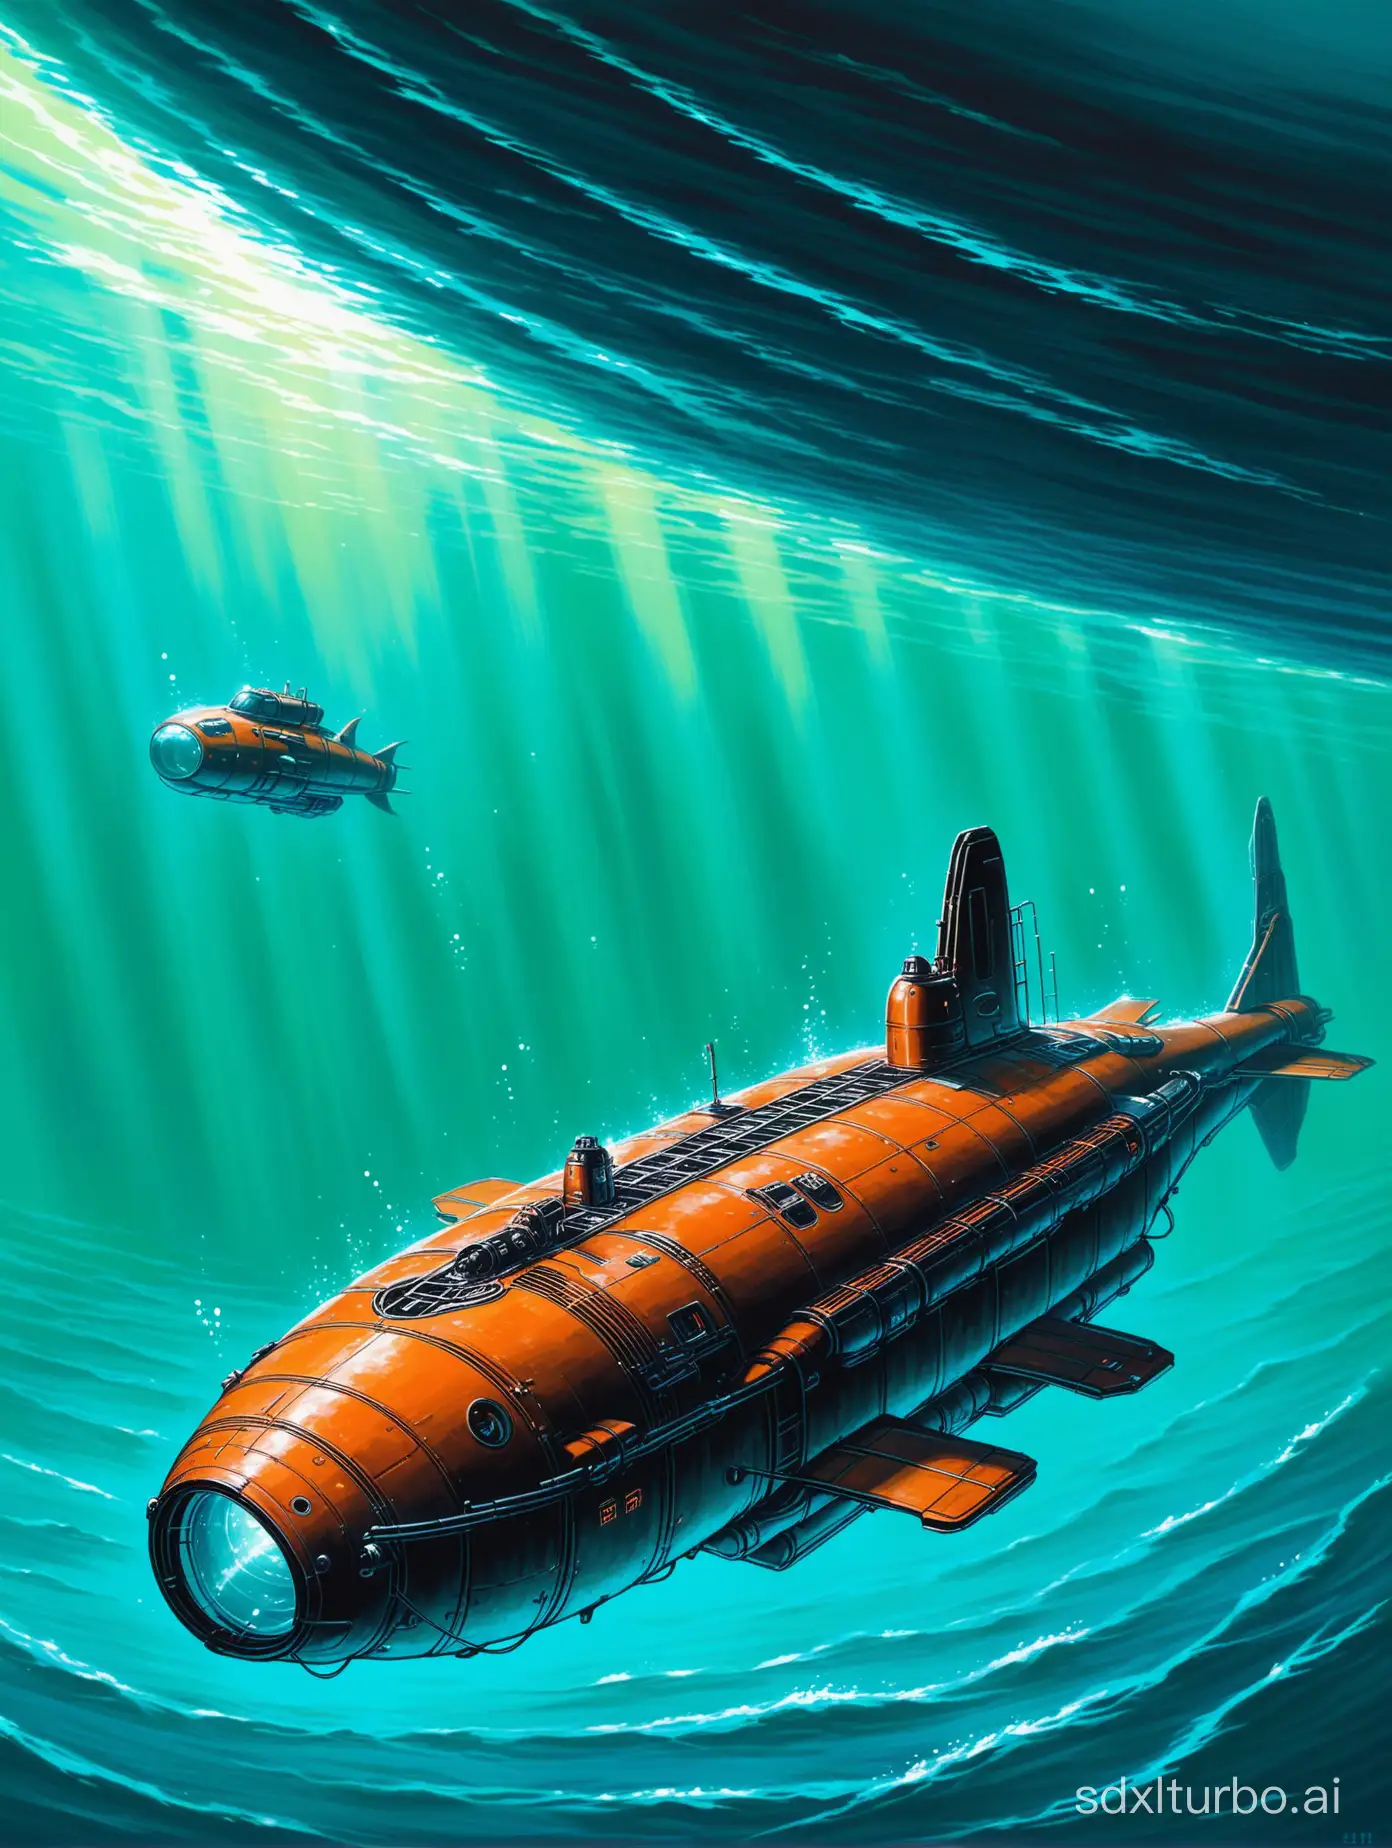 Futuristic-Submersible-Dragon-SciFi-Artwork-Depicting-Underwater-Exploration